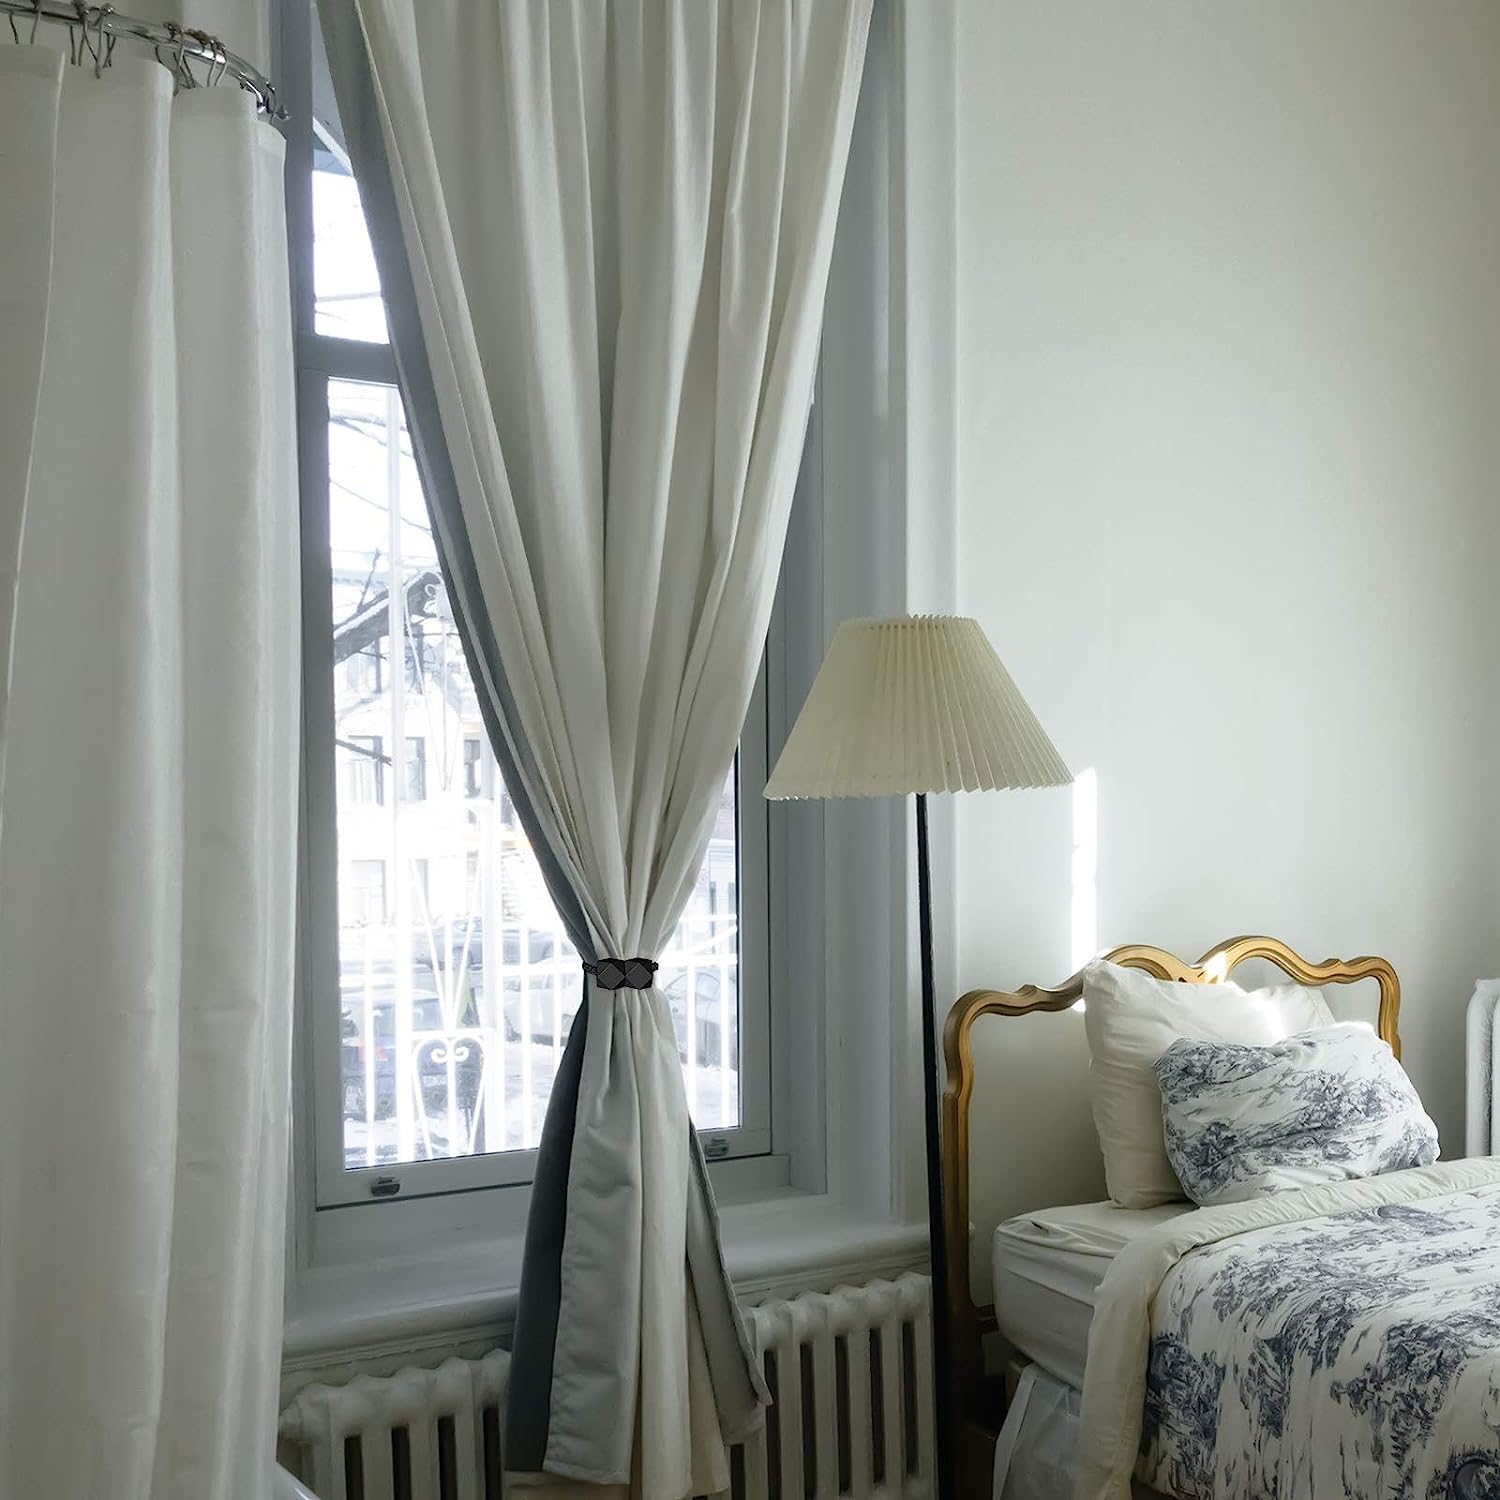 HIASTRA Abrazaderas magnéticas fuertes para cortinas, paquete de 2 lazos  modernos para cortinas decorativas para cortinas de cuerda para exteriores